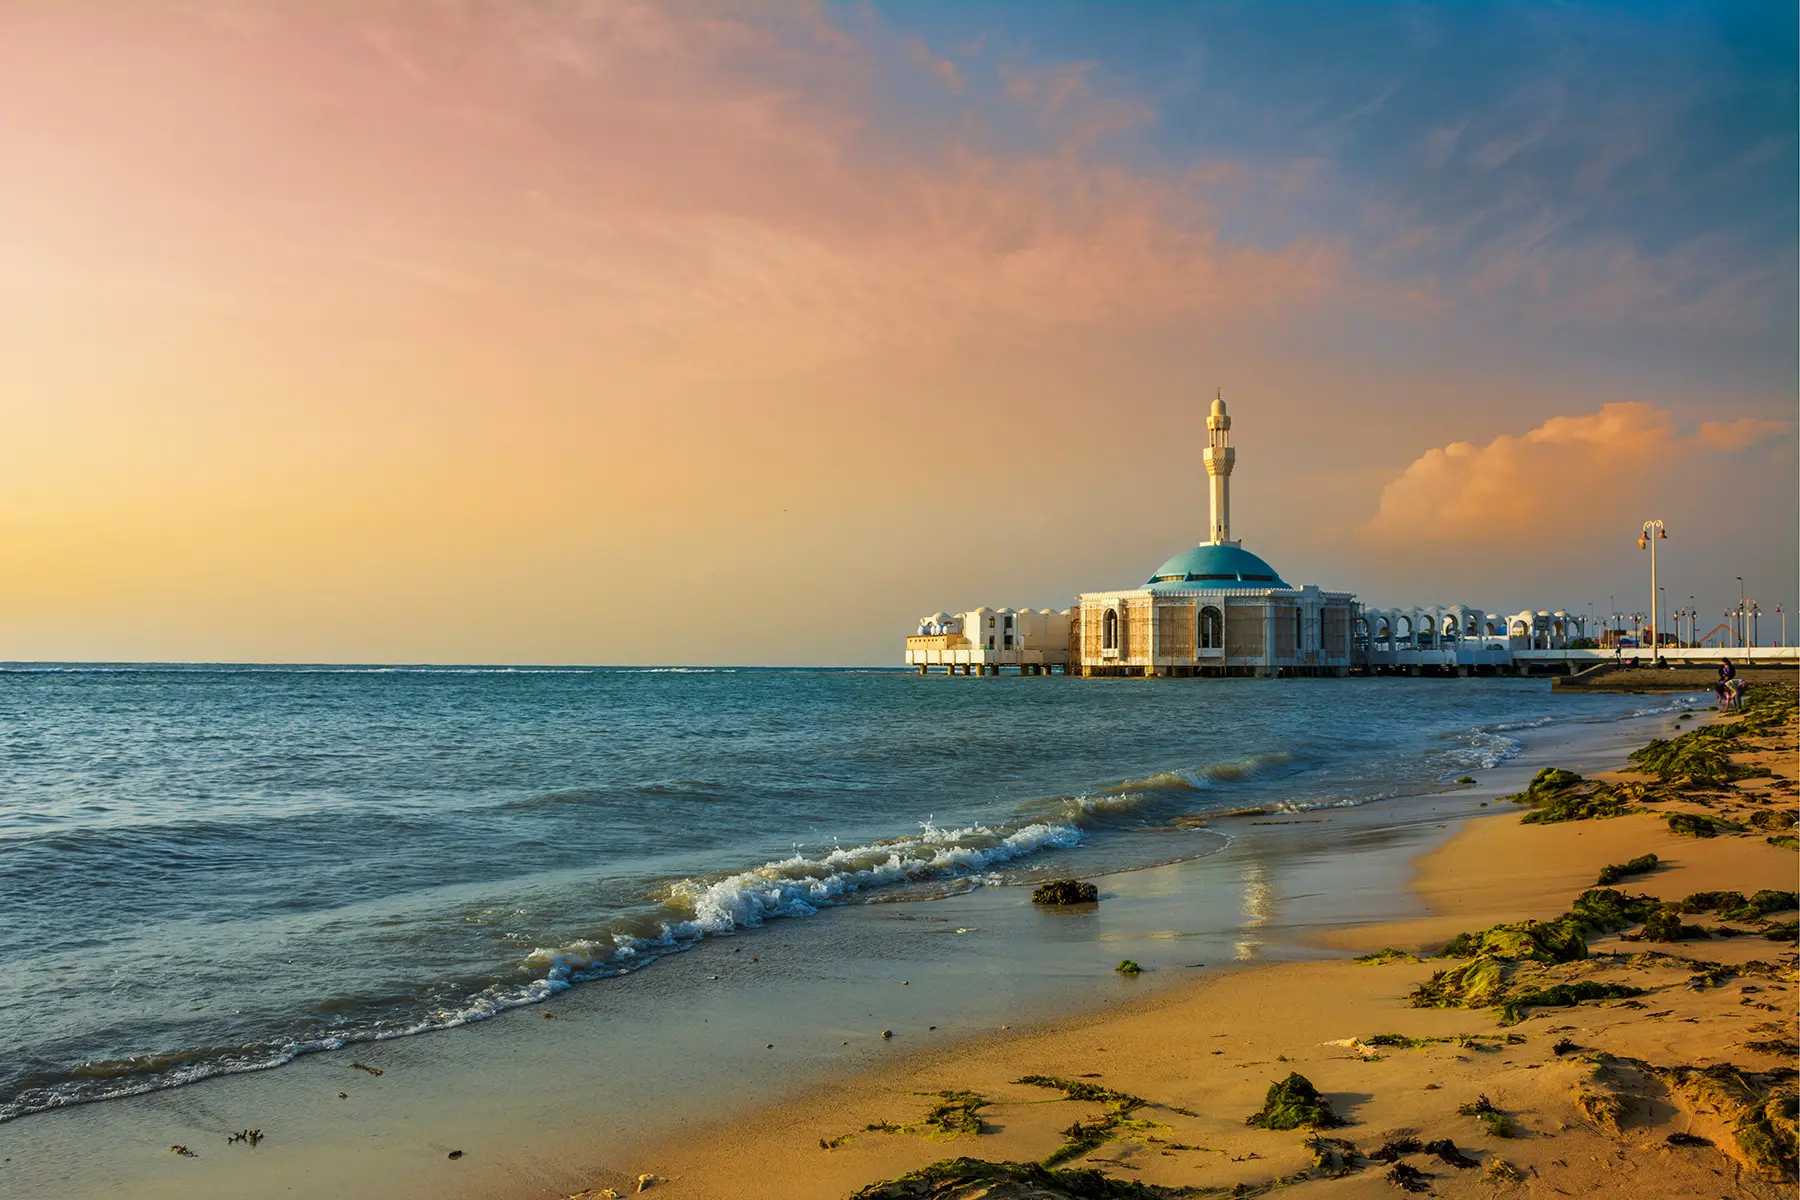 Haql Shipwreck Beach in Saudi Arabia